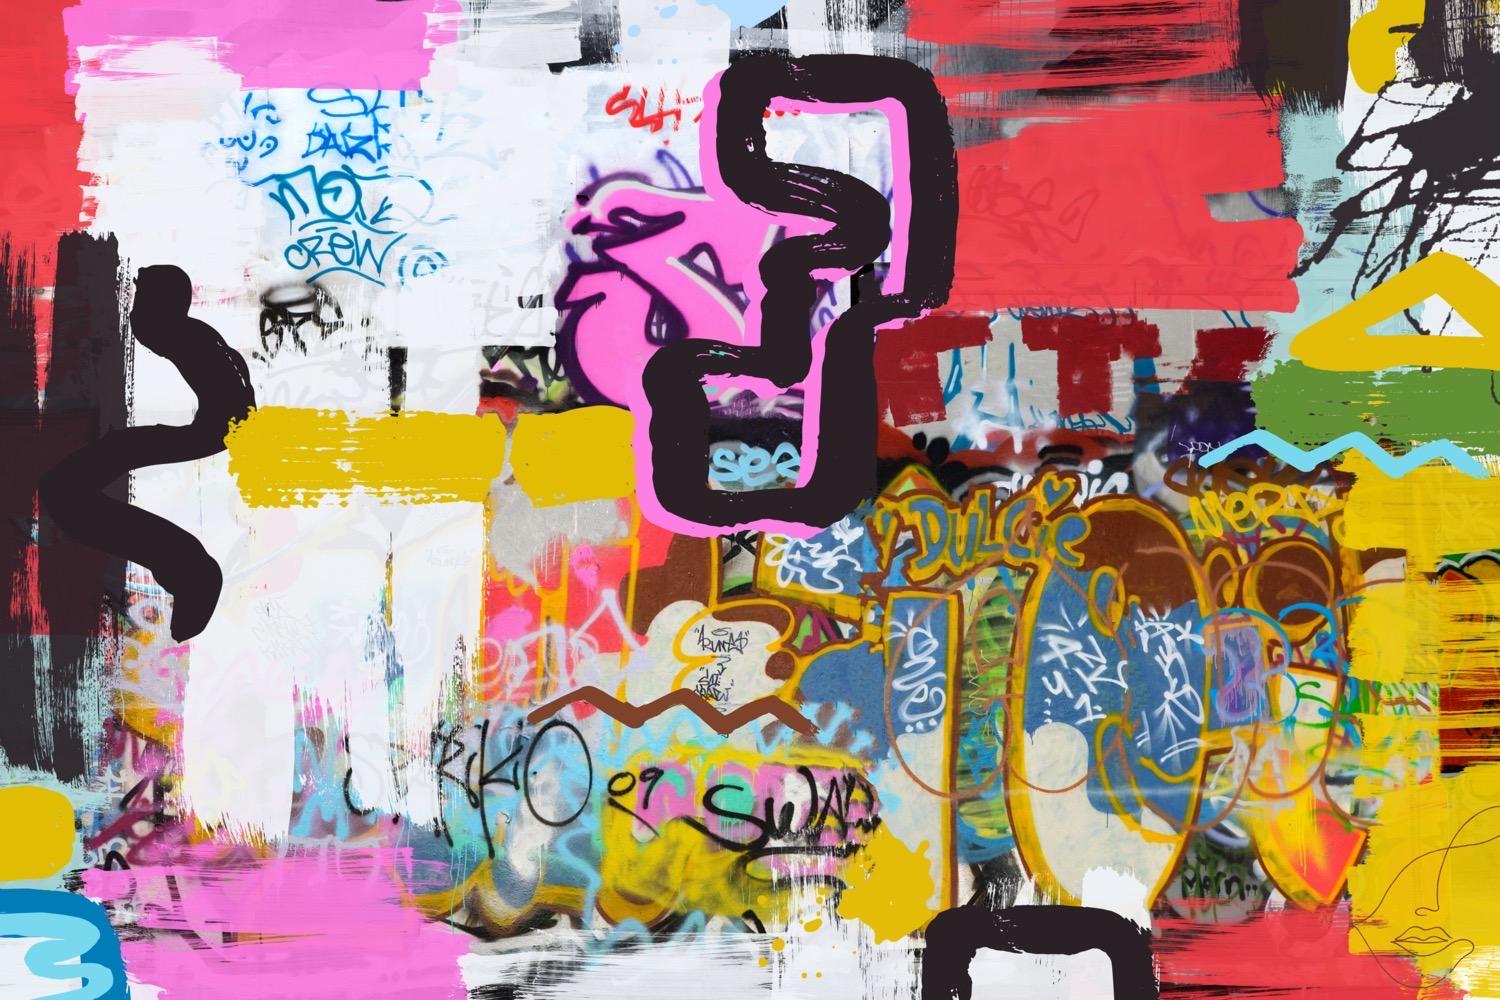 Rosa Graffiti Street Art Mixed Media auf Leinwand, Im improvisatorischer Stil  45X60